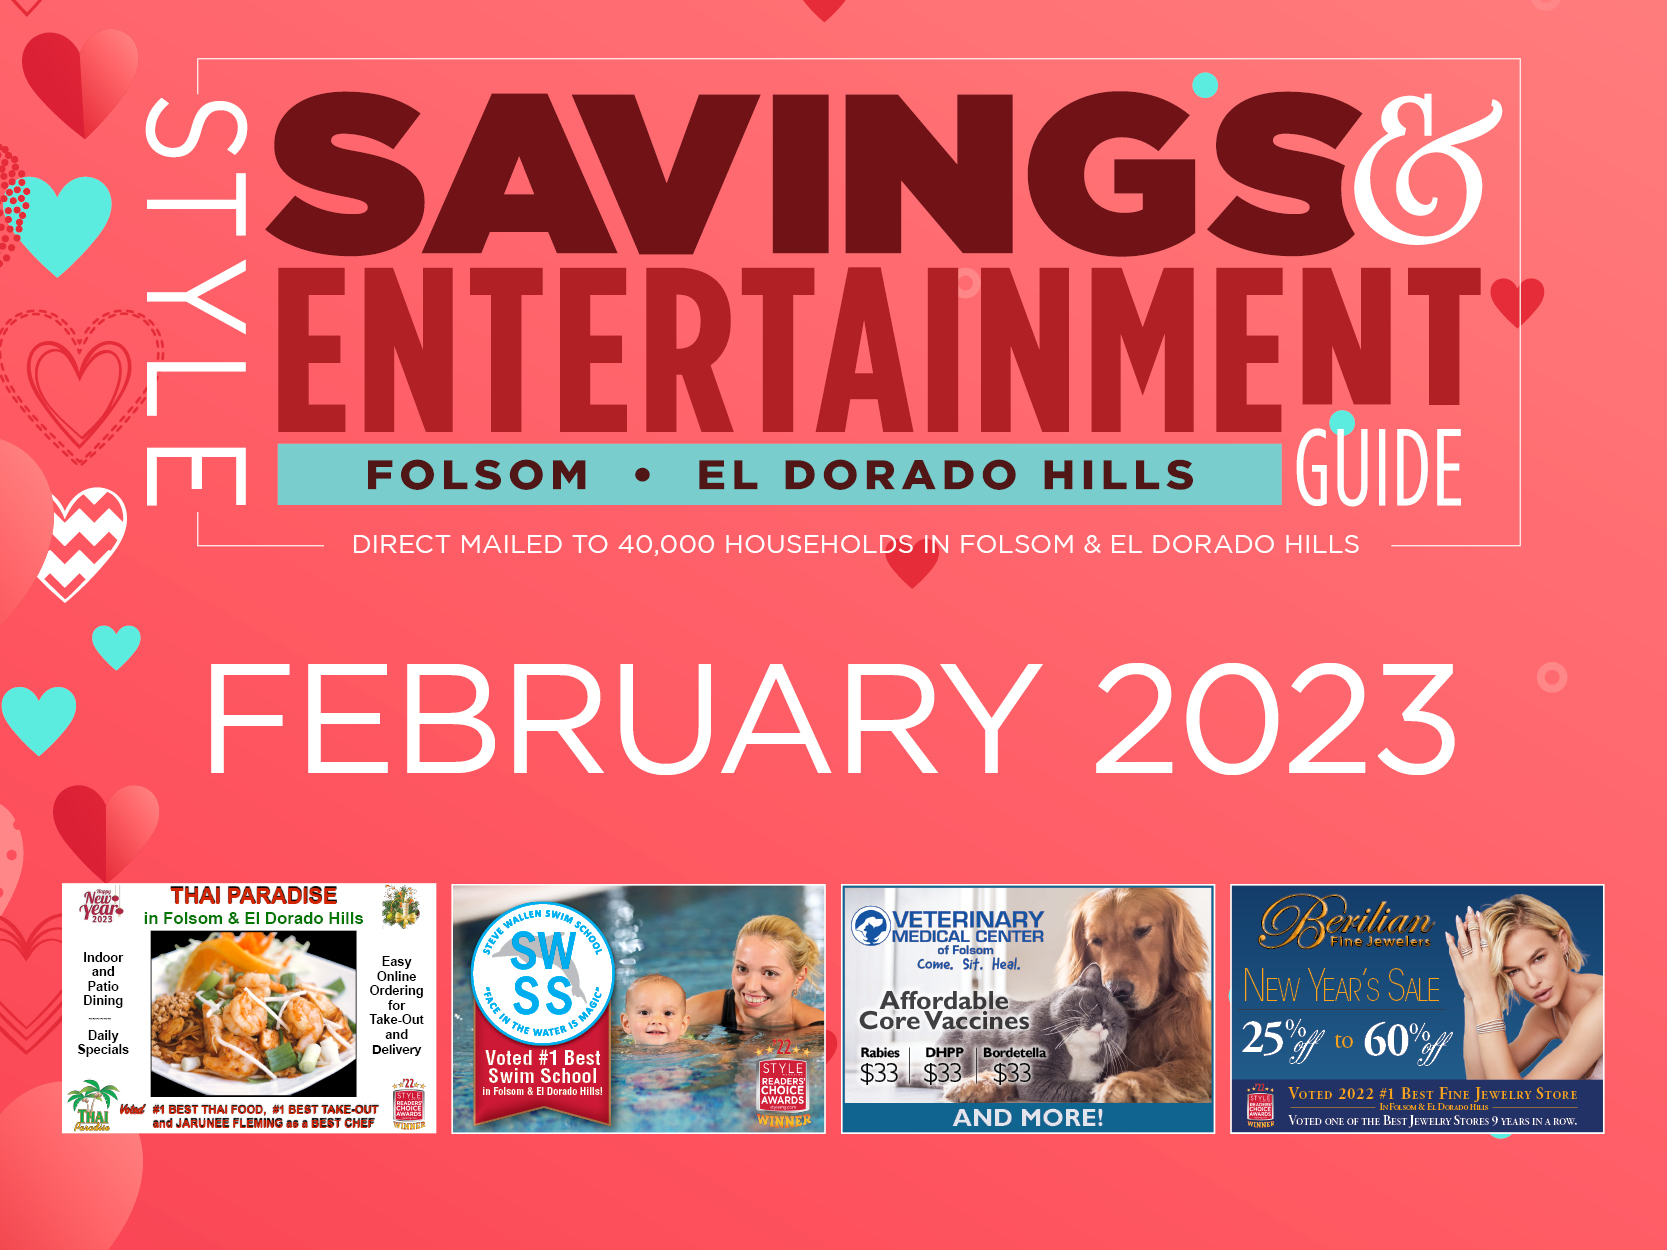 February 2023 Event Guide